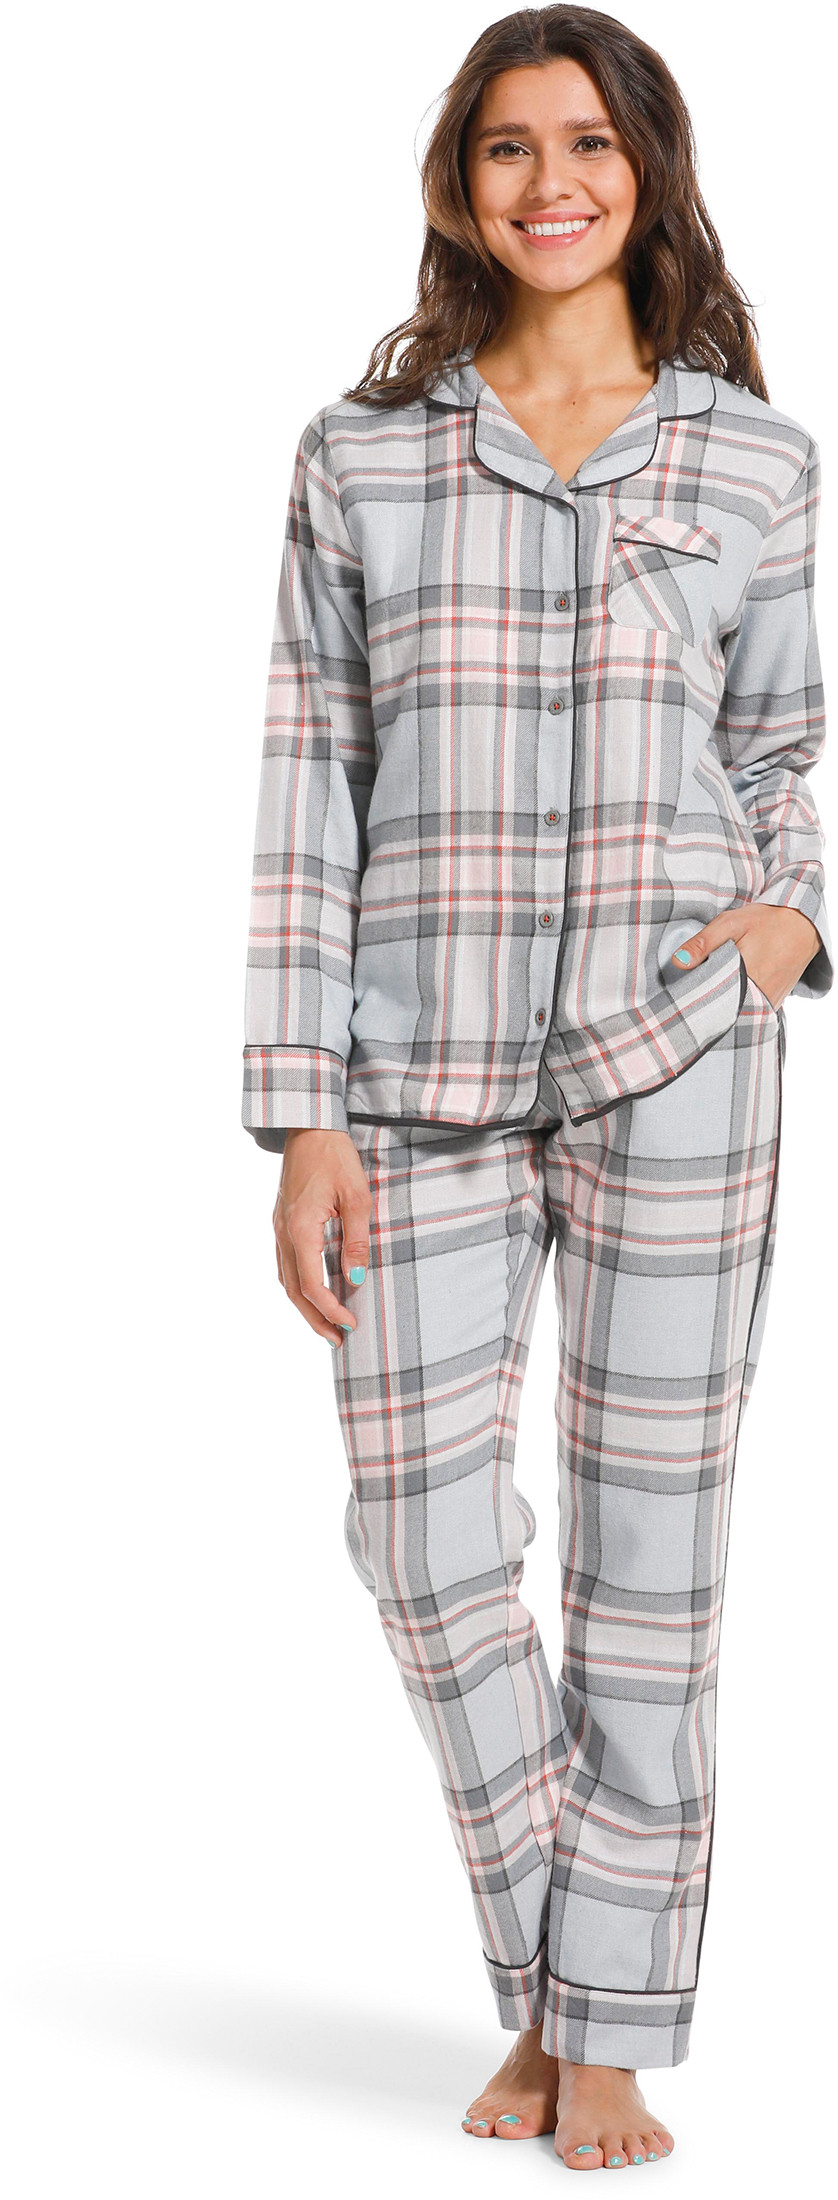 Rebelle dames pyjama flanel 21222-458-6-42